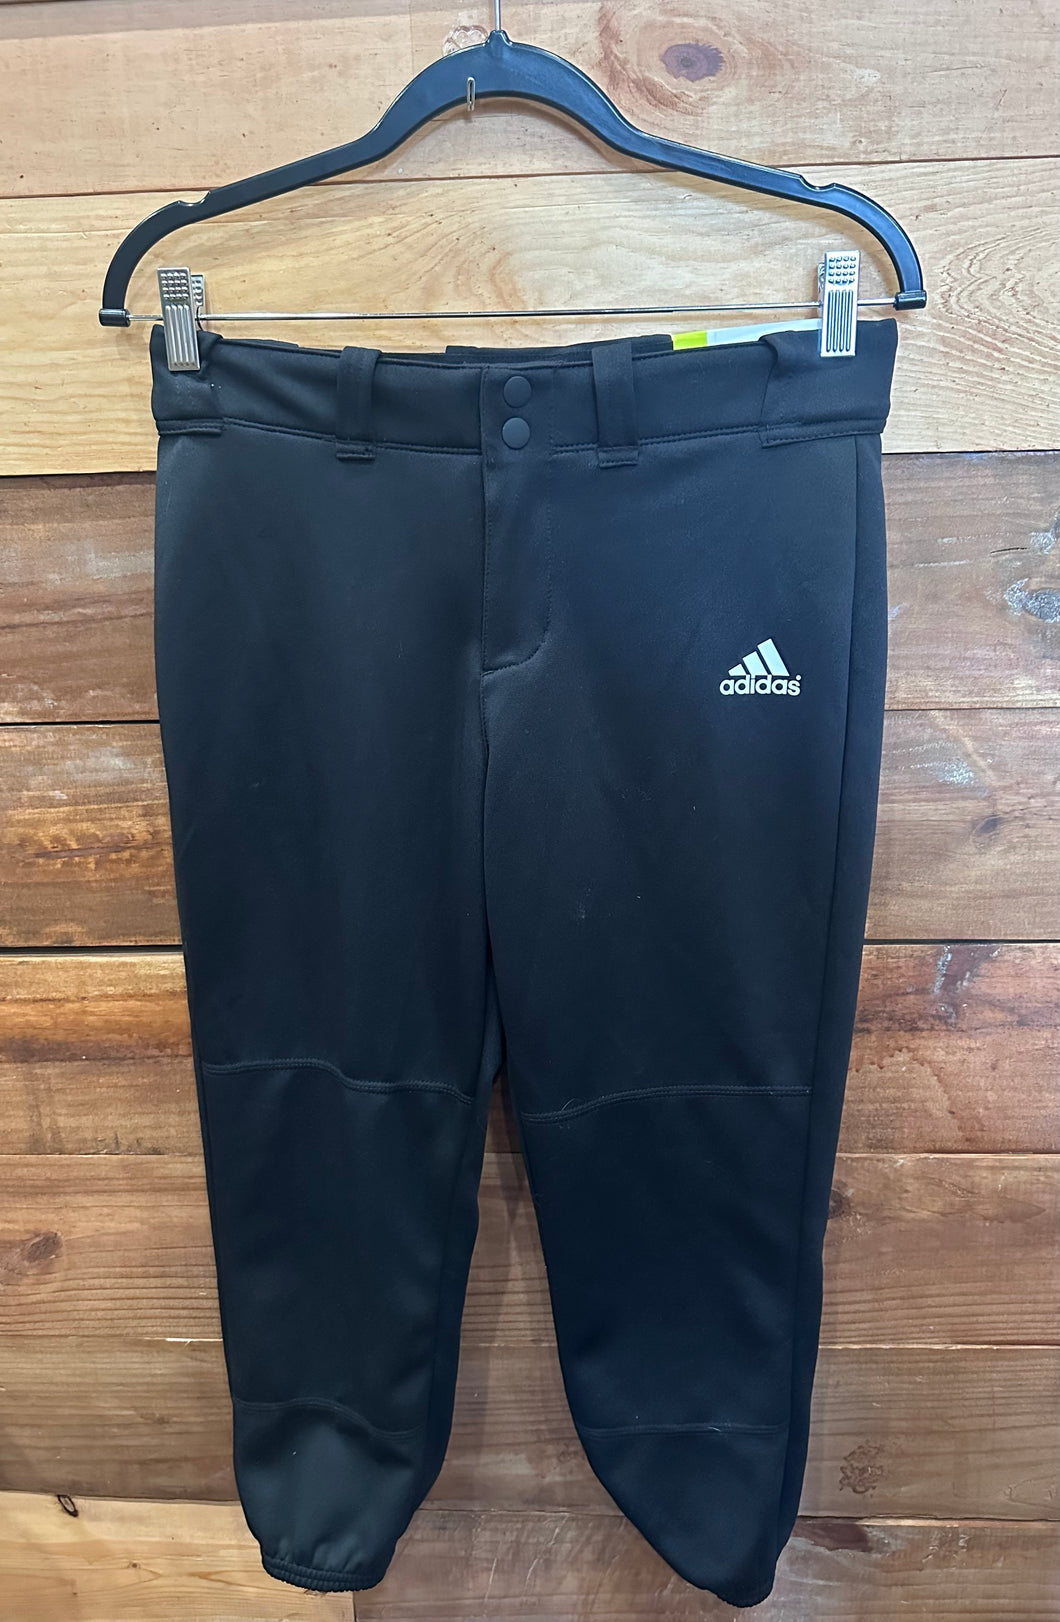 Adidas Black Softball Pants Size Small